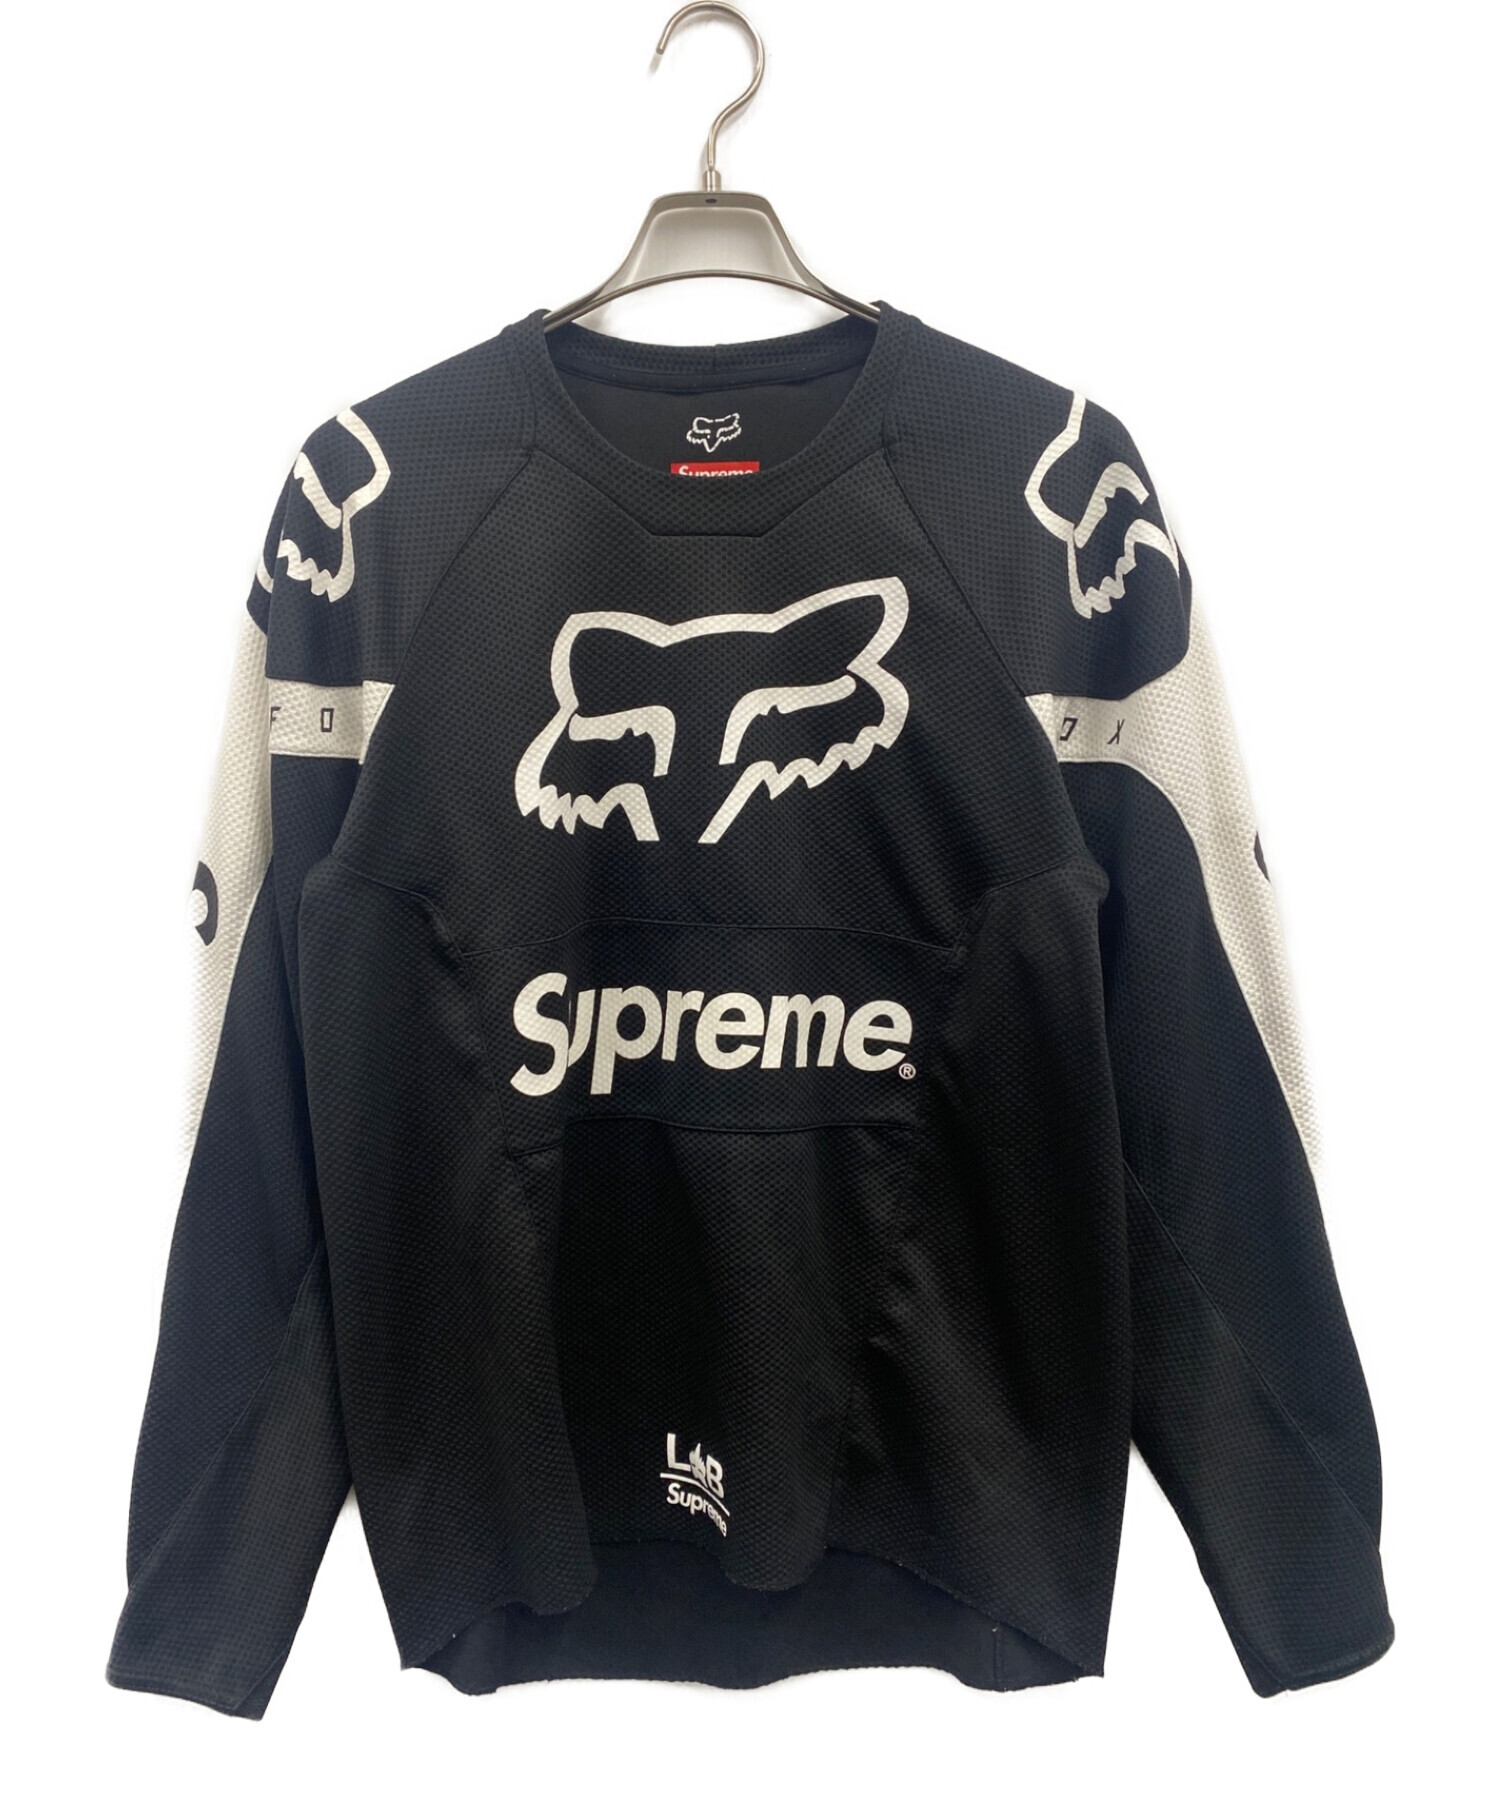 SUPREME (シュプリーム) Fox Racing Moto Jersey ブラック サイズ:M